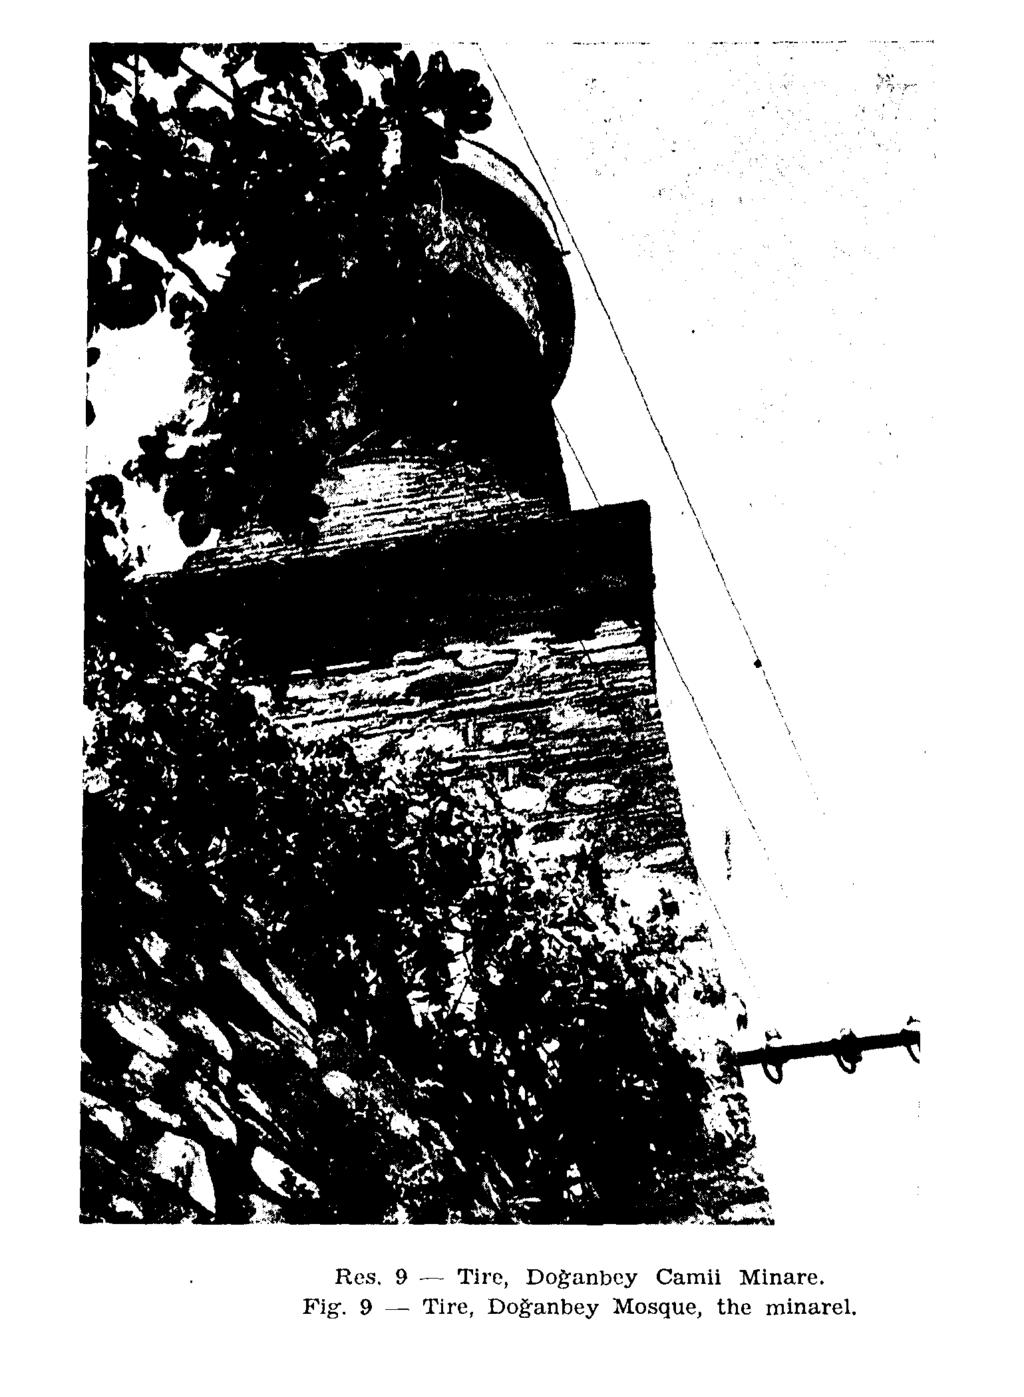 Res. 9 Tiro, Doganbey Camii Minare. Fig-.